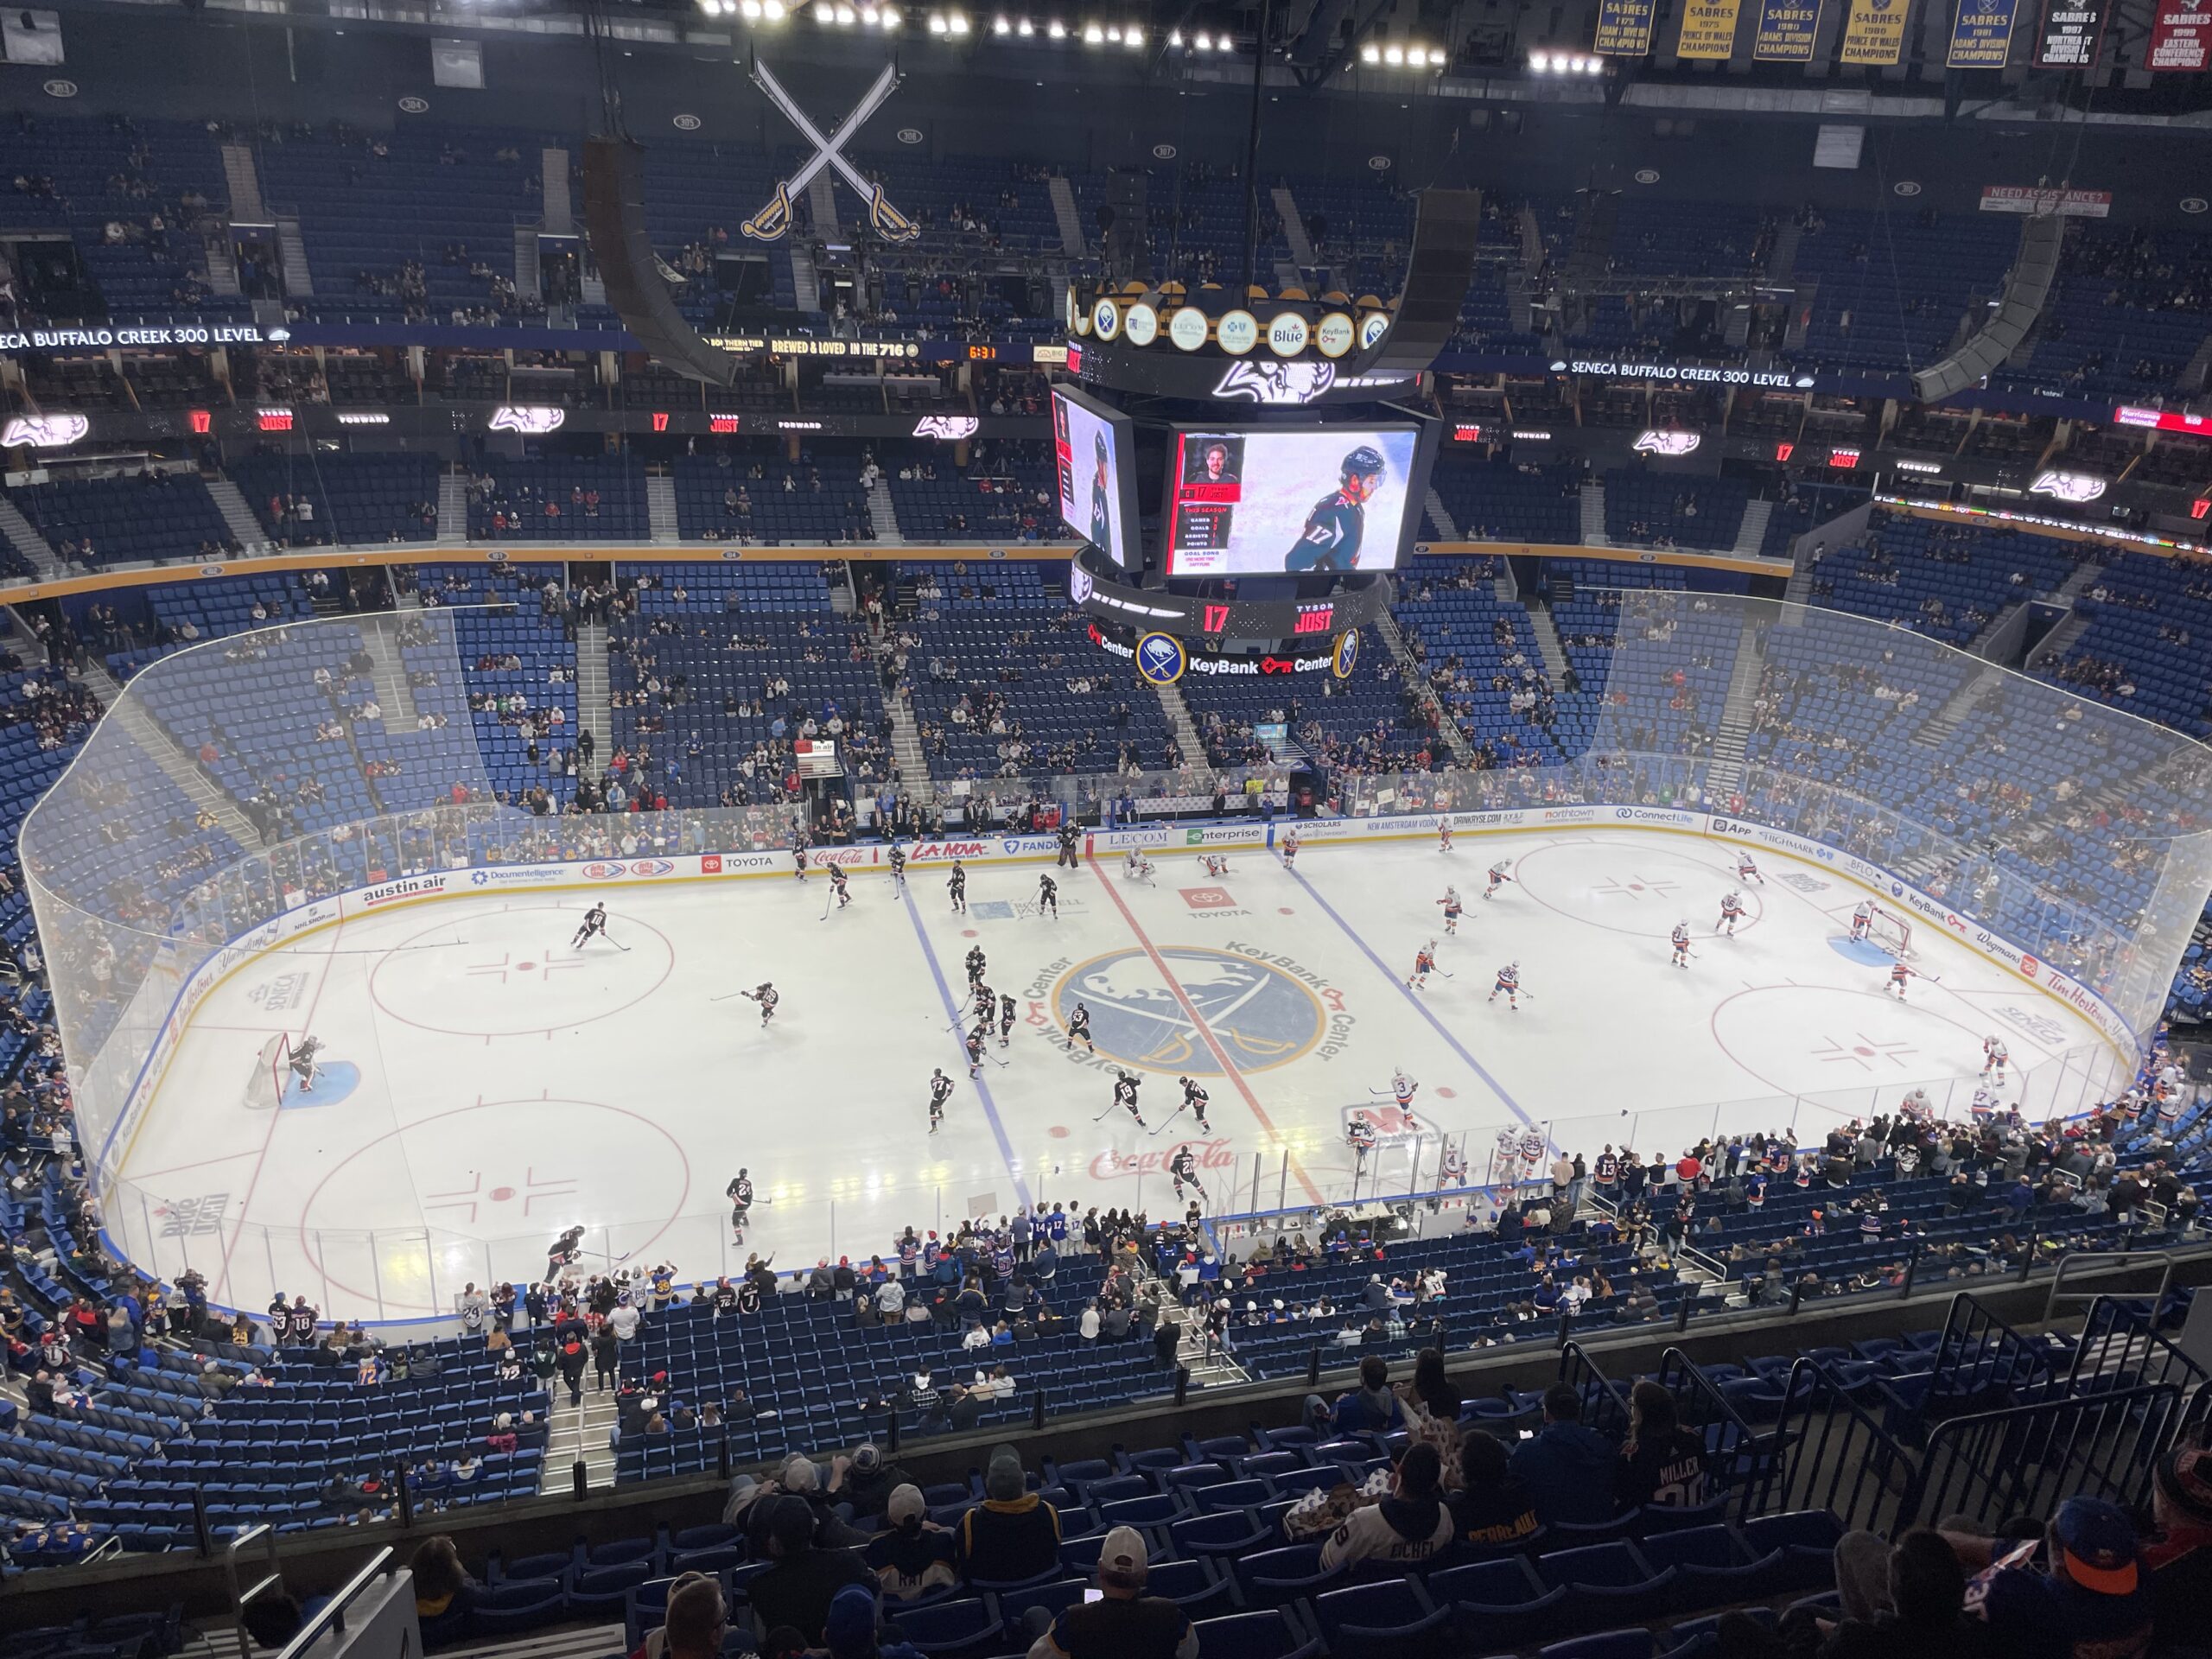 Game Preview: Islanders at Sabres